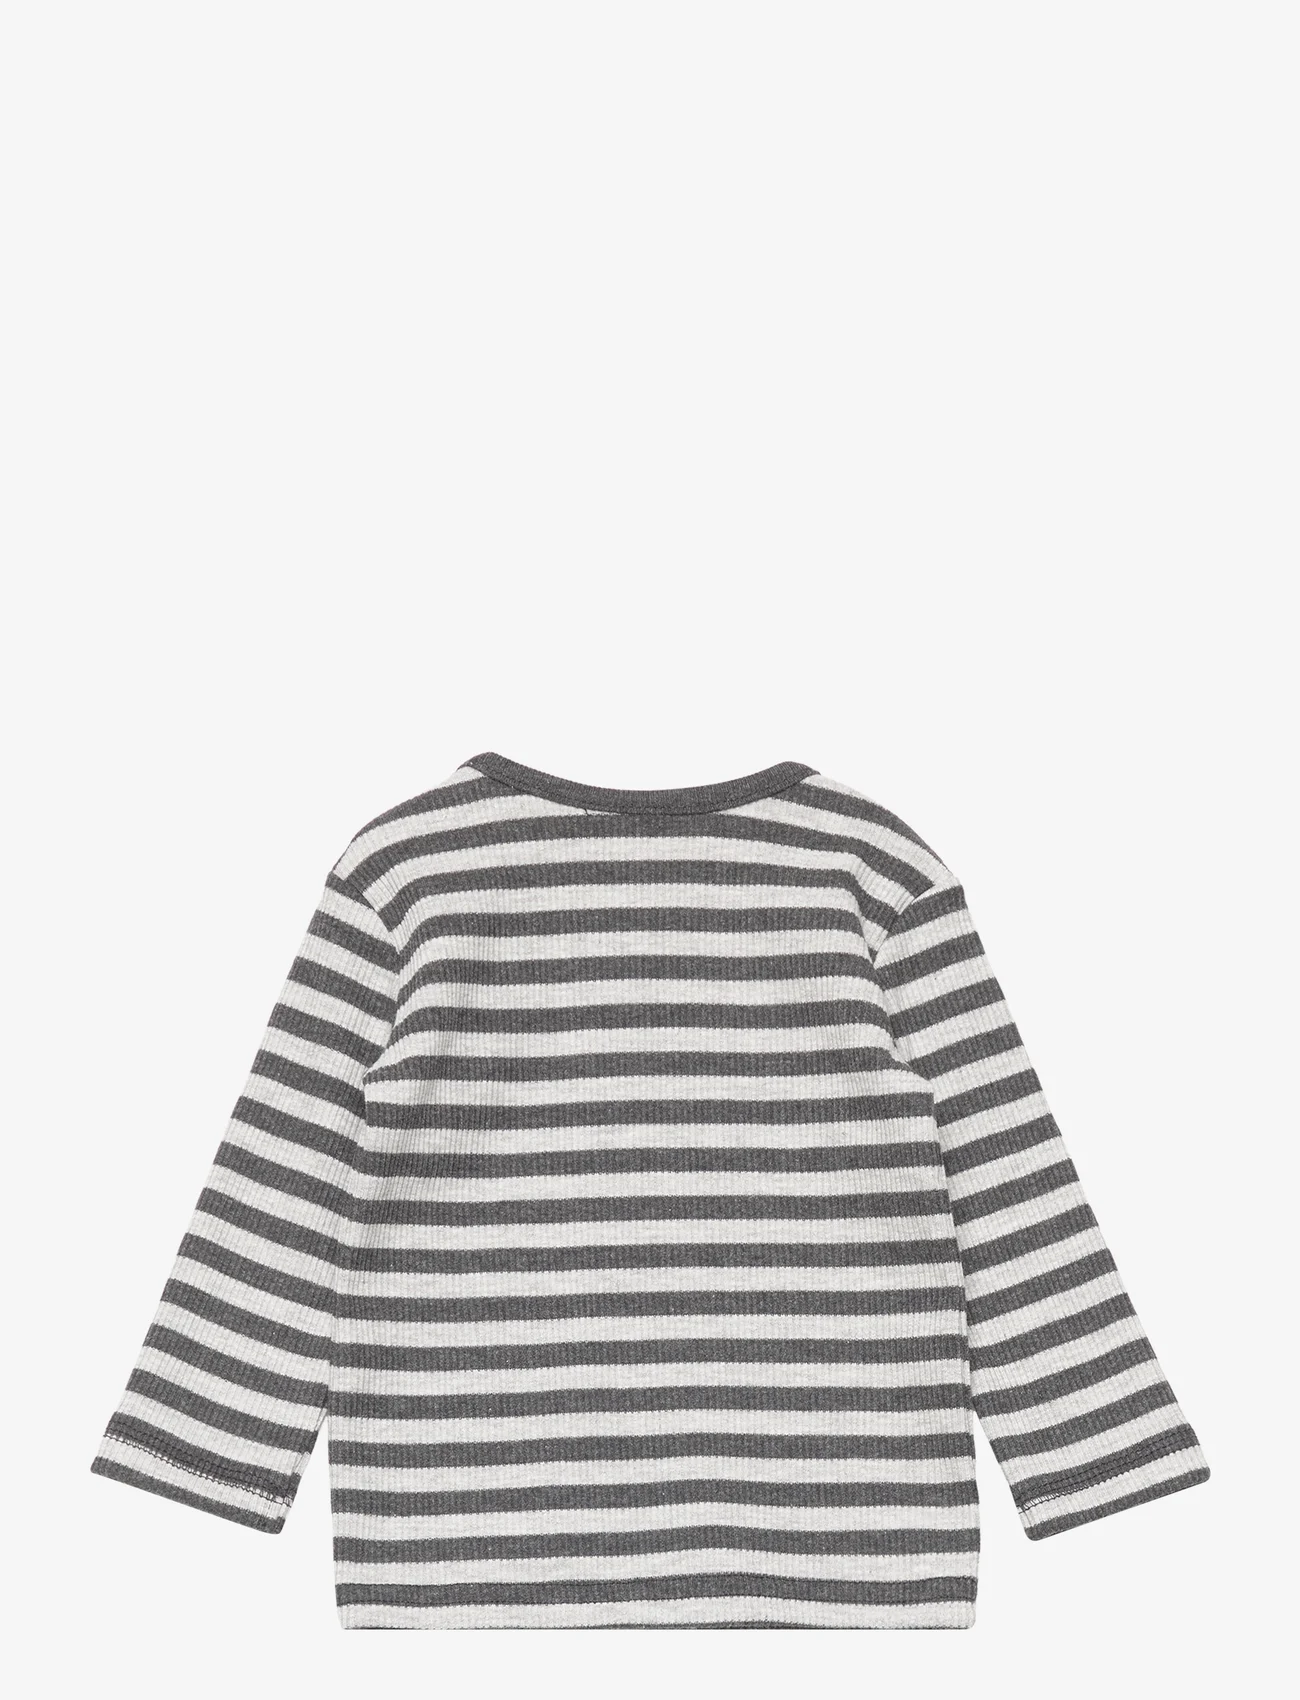 Noa Noa miniature - T-shirt - long-sleeved t-shirts - light/dark grey melange - 1